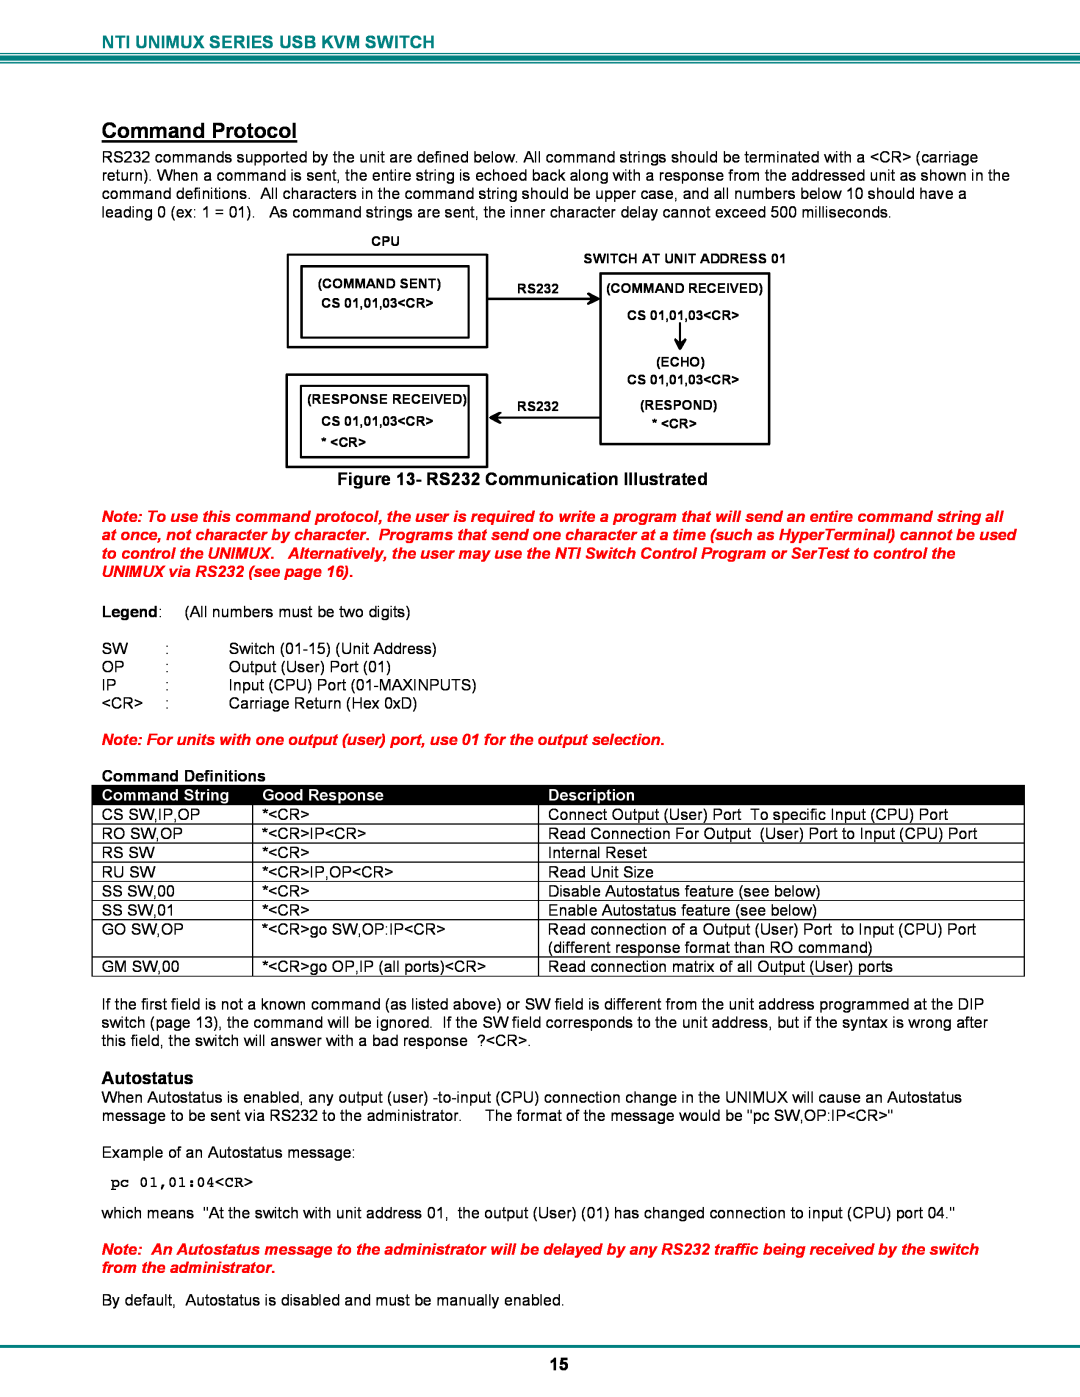 Network Technologies UNIMUX-DVI-xHD Command Protocol, RS232 Communication Illustrated, Autostatus, Command String 